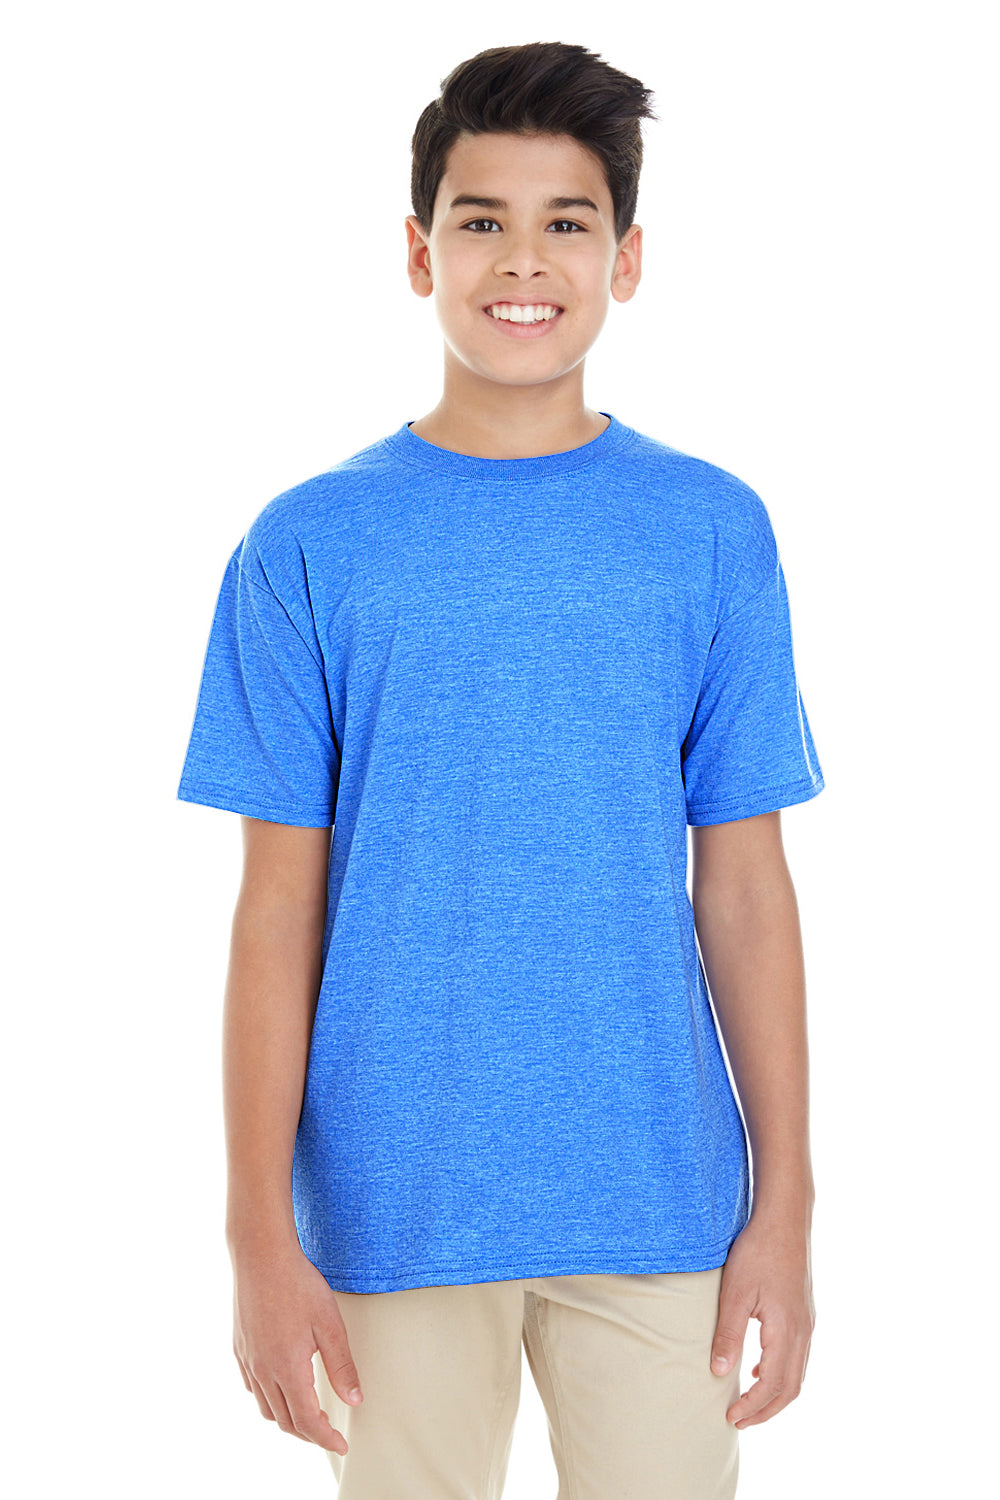 Gildan G645B Youth Softstyle Short Sleeve Crewneck T-Shirt Heather Royal Blue Front